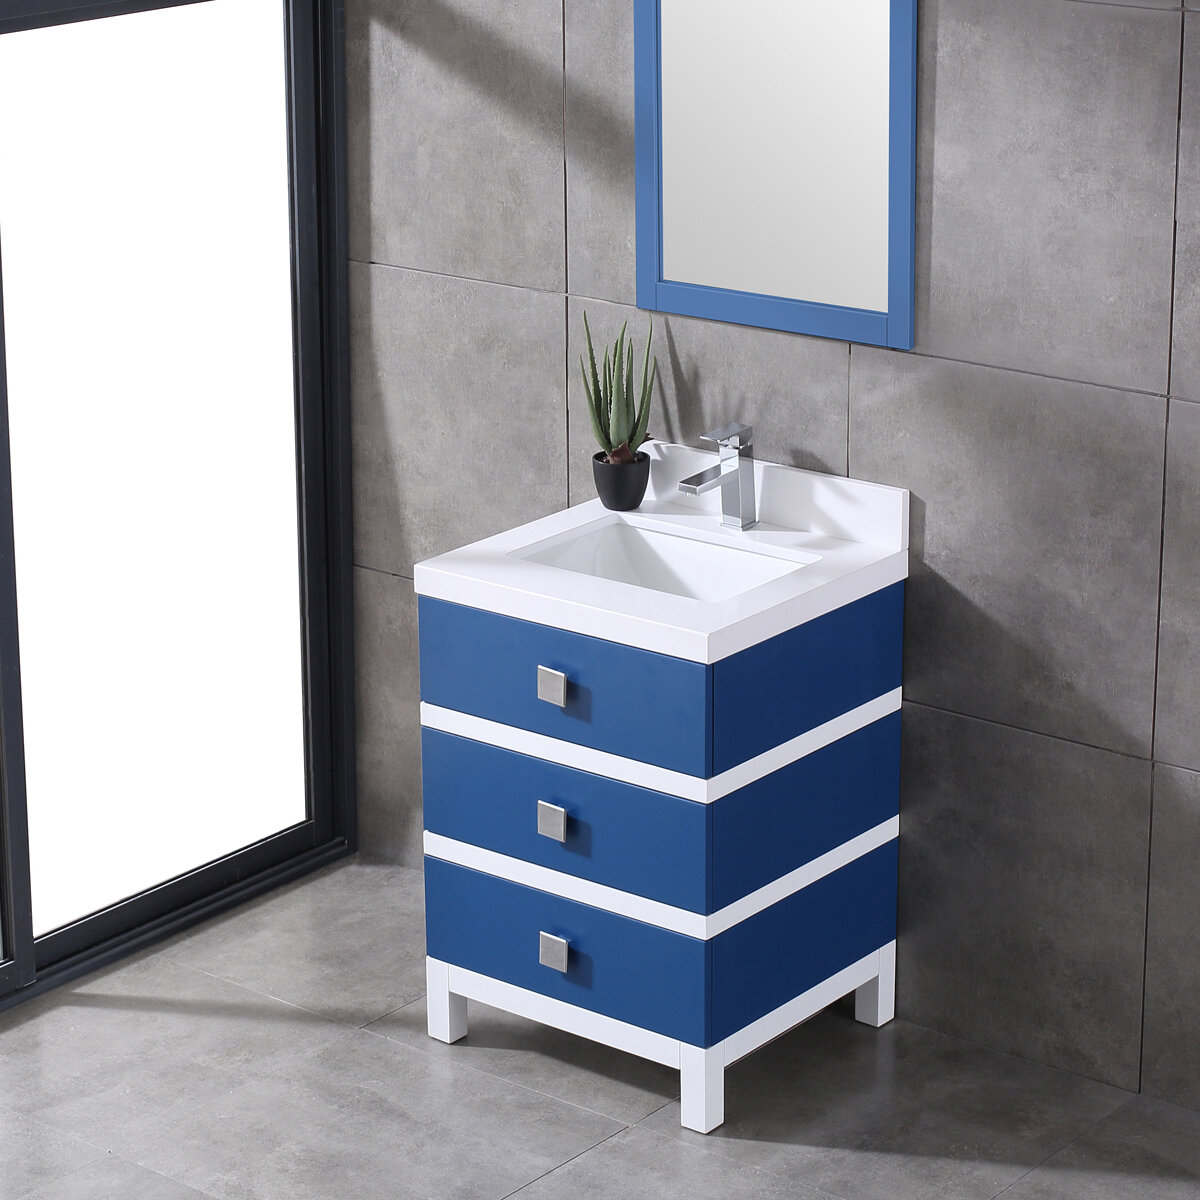 Eviva Sydney 24 Inch Blue And White Bathroom Vanity Wayfair